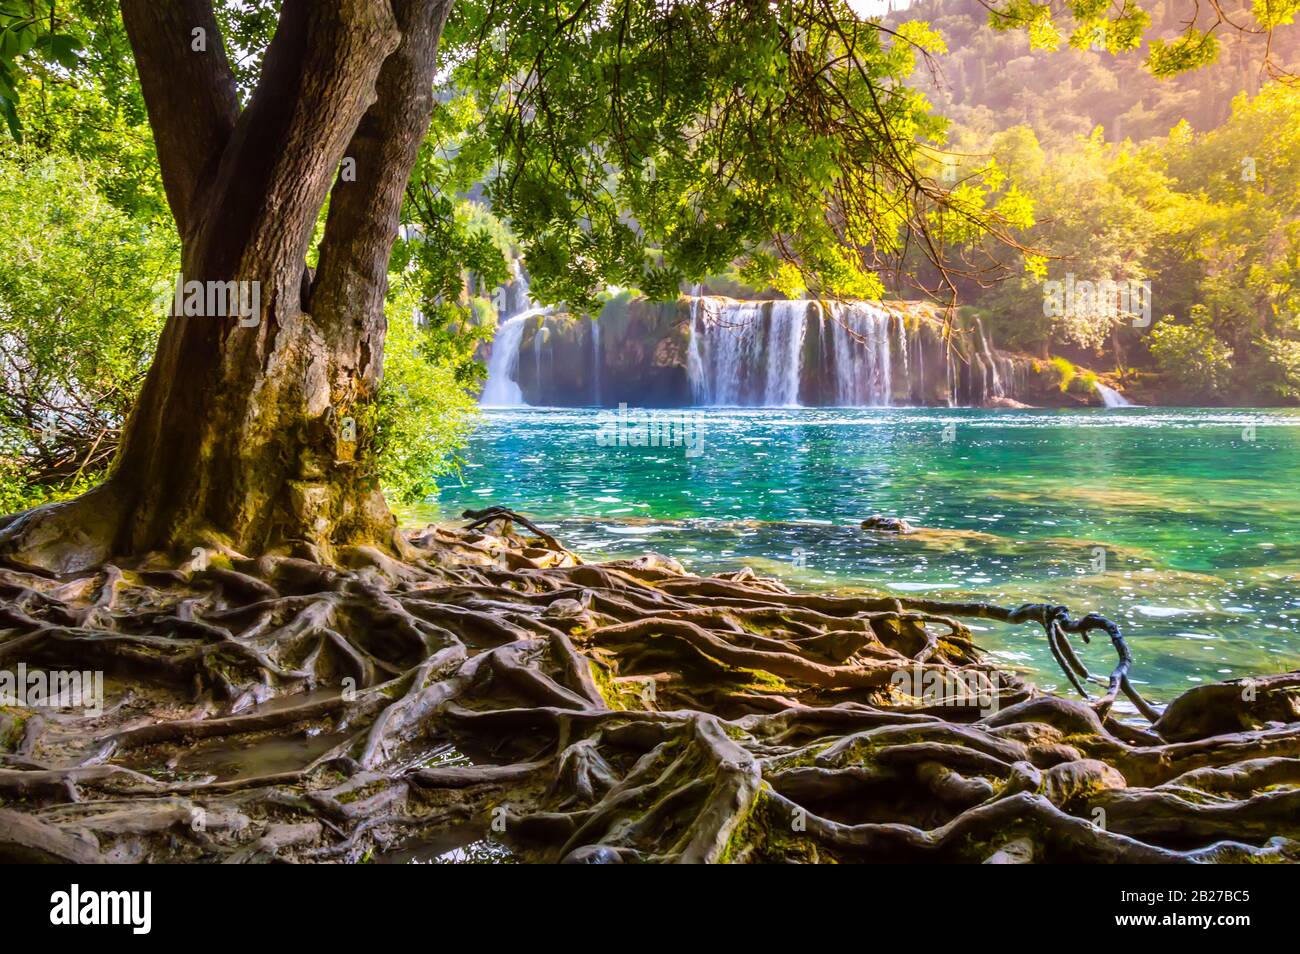 Beautiful Krka Waterfalls in Krka National Park, Croatia. Skradinski buk is the longest waterfall on the Krka River with clear turquoise water and den Stock Photo